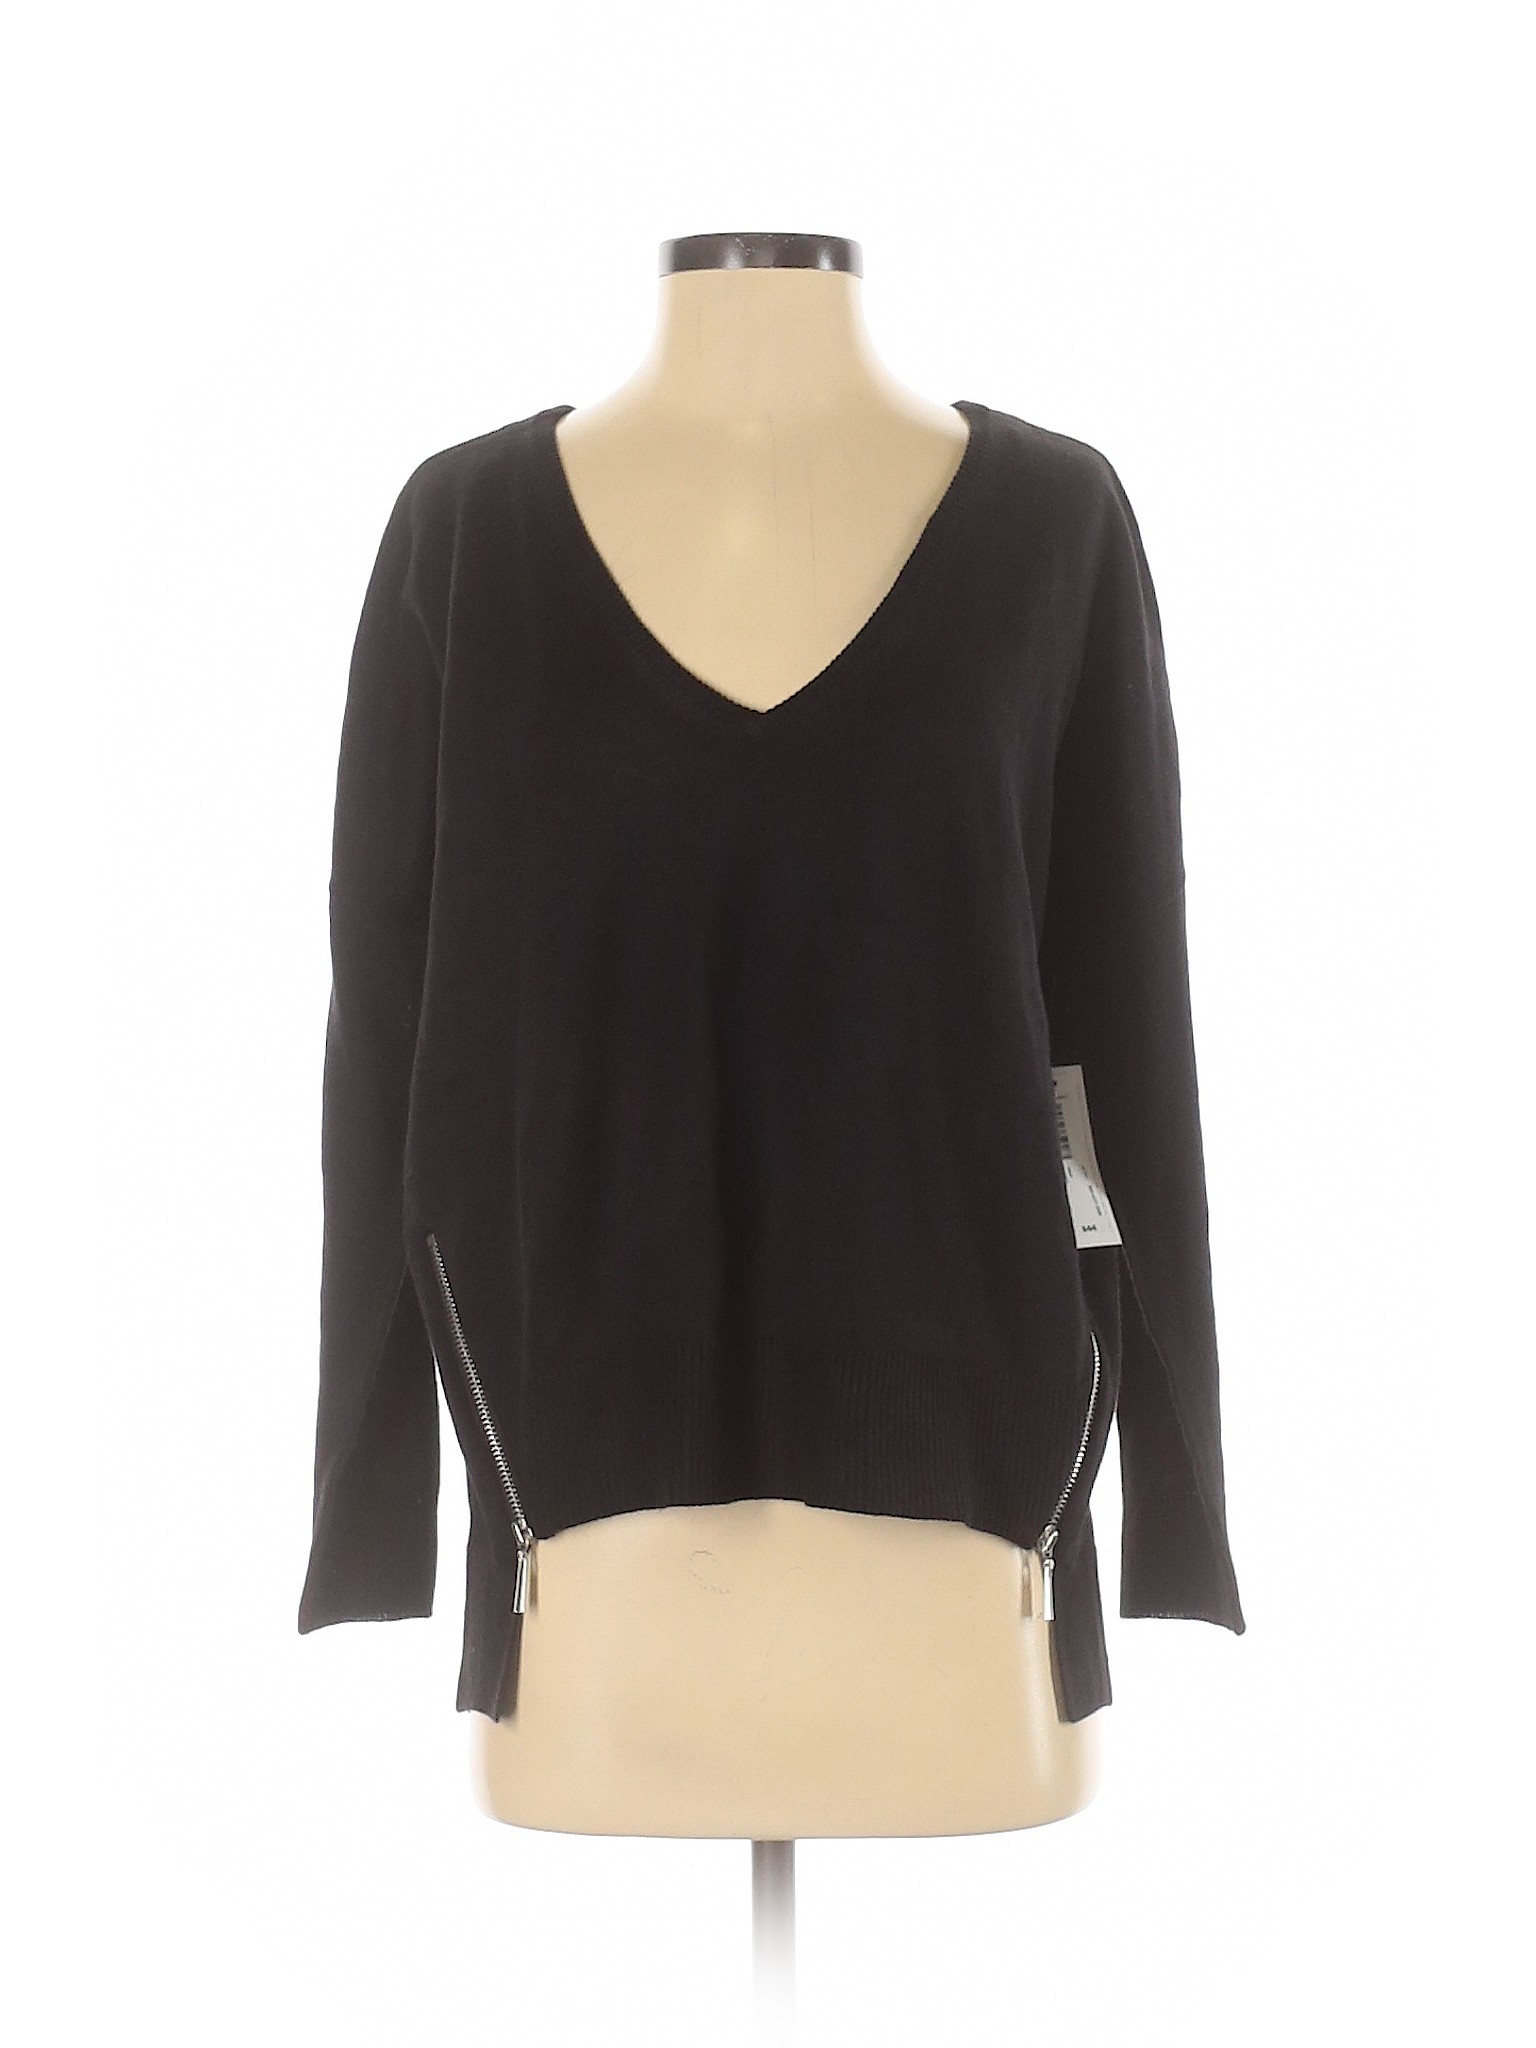 NWT Bisou Bisou Women Black Pullover Sweater S | eBay